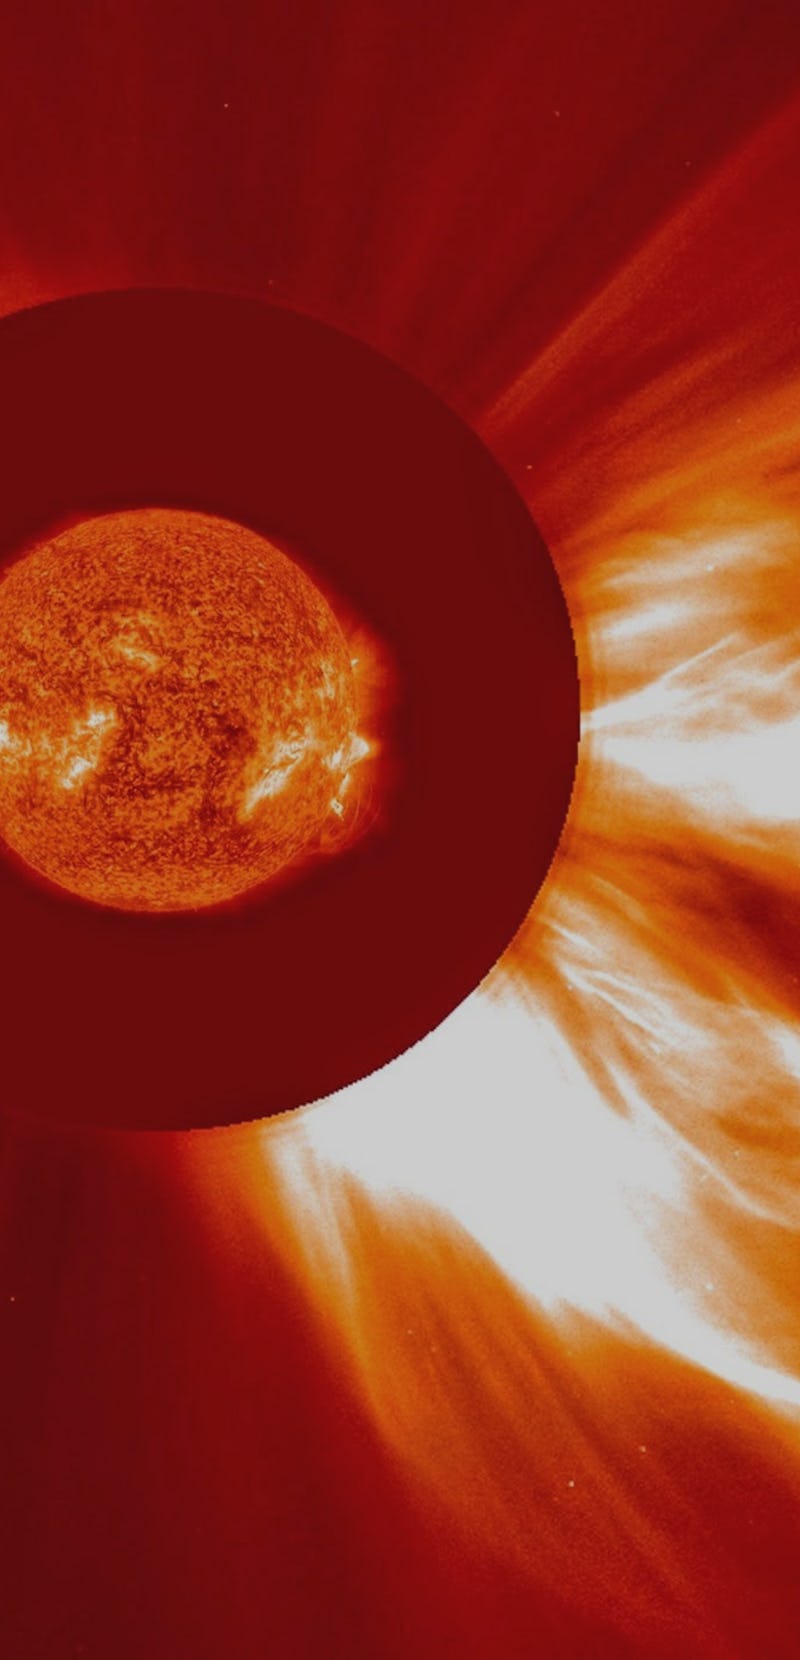 sun solar cycle coronal mass ejection